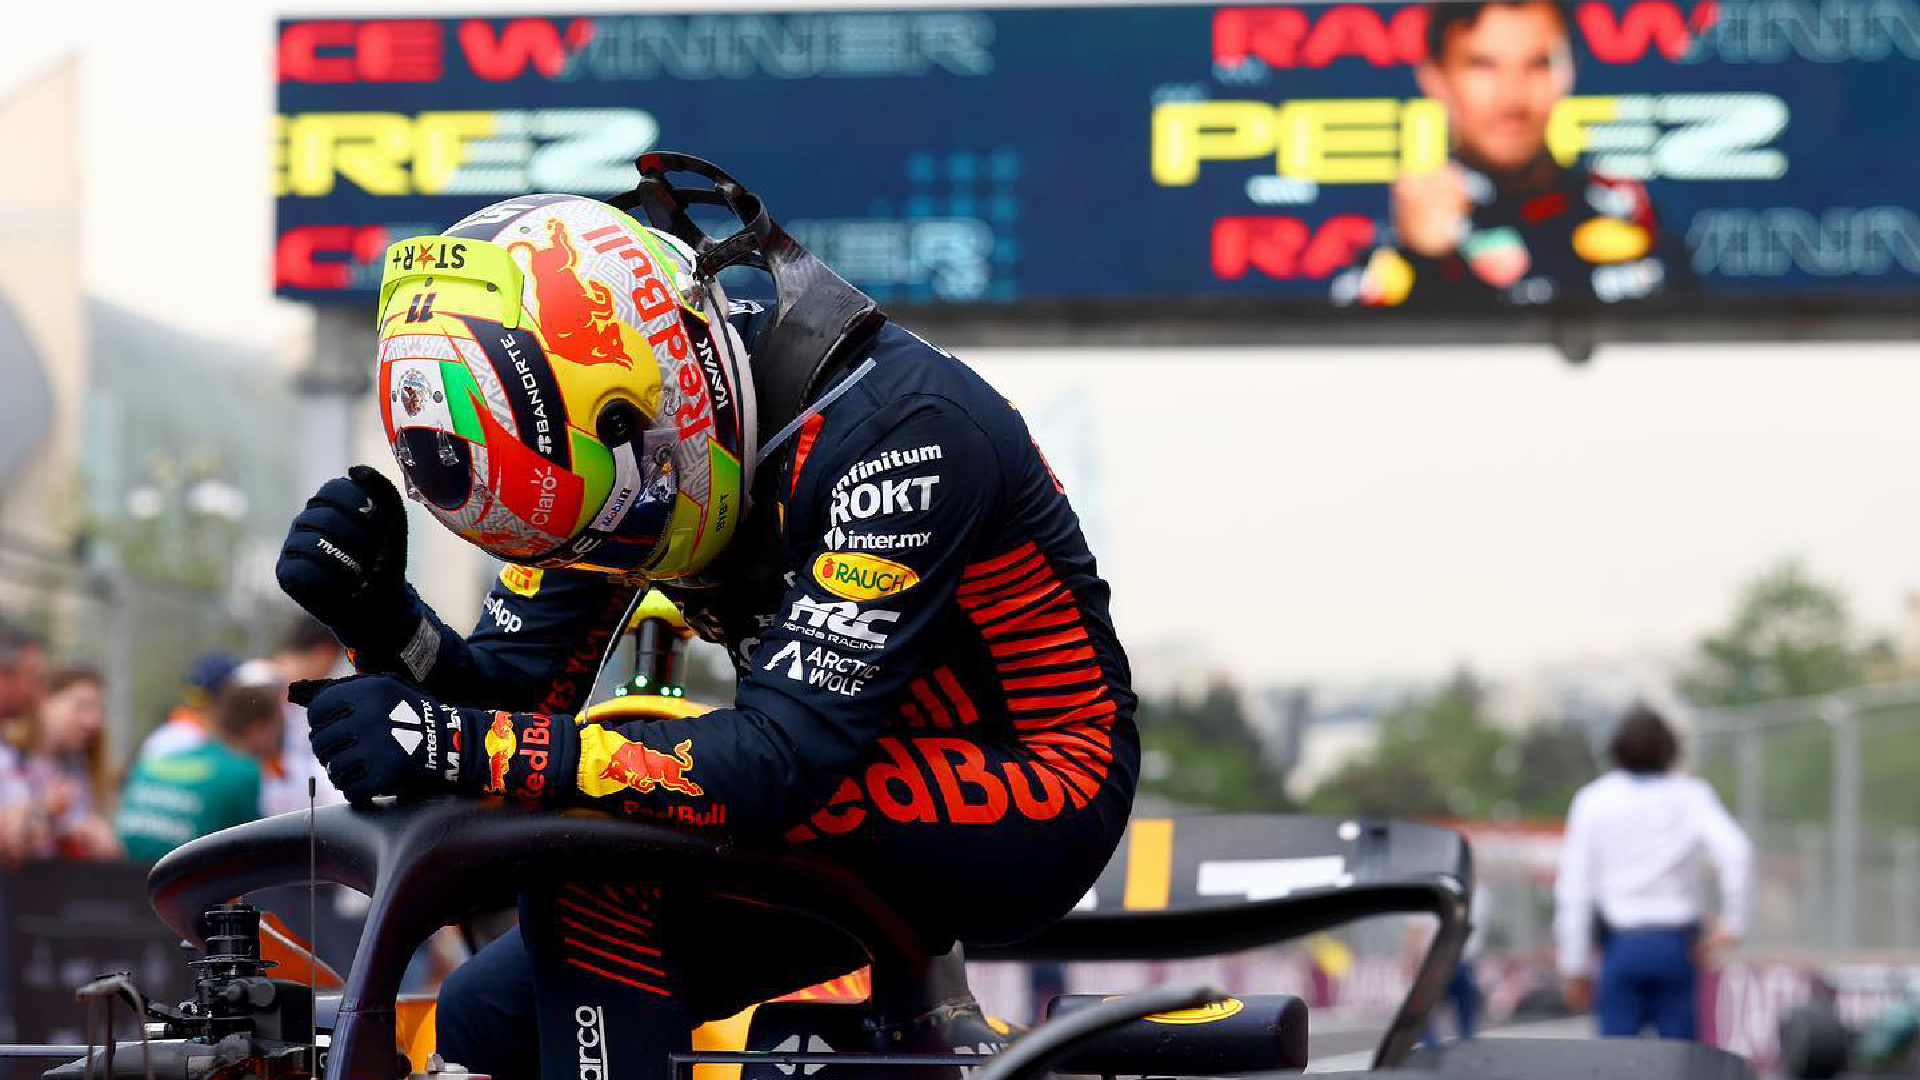 F1: minuto a minuto de Checo Pérez en el Gran Premio de Mónaco 